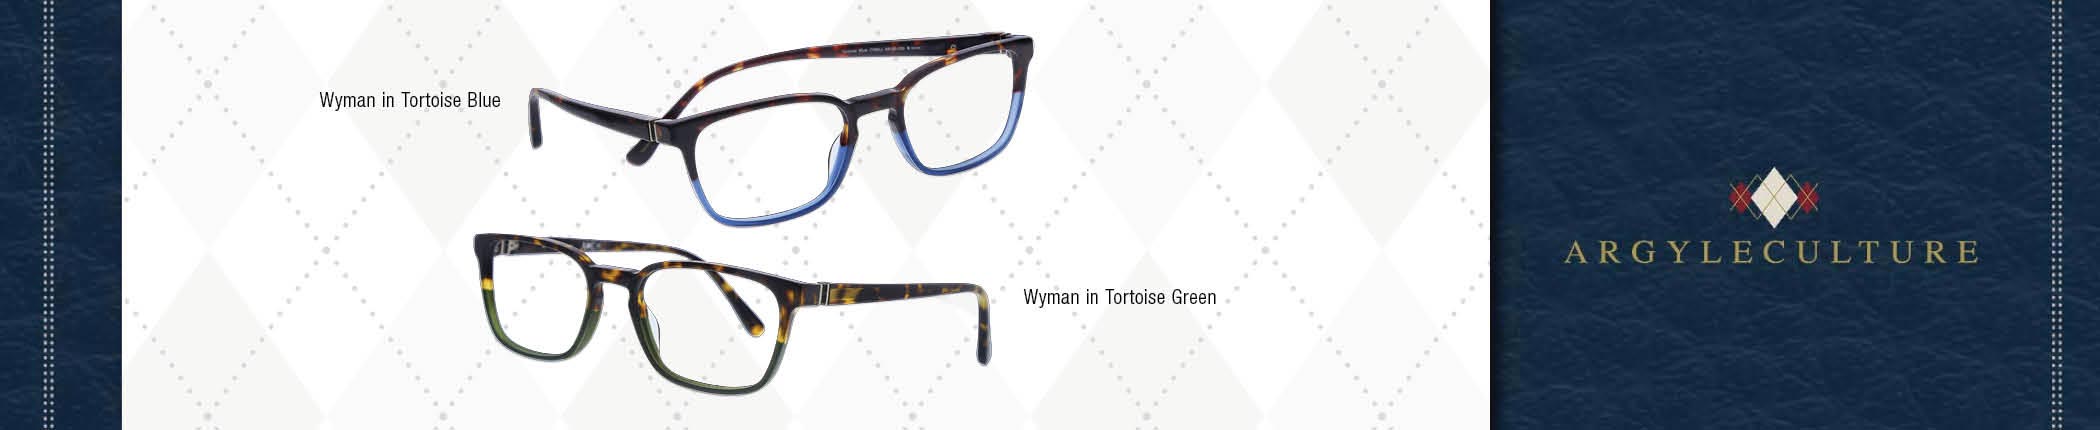 Shop Argyleculture Eyeglasses - featuring Wyman